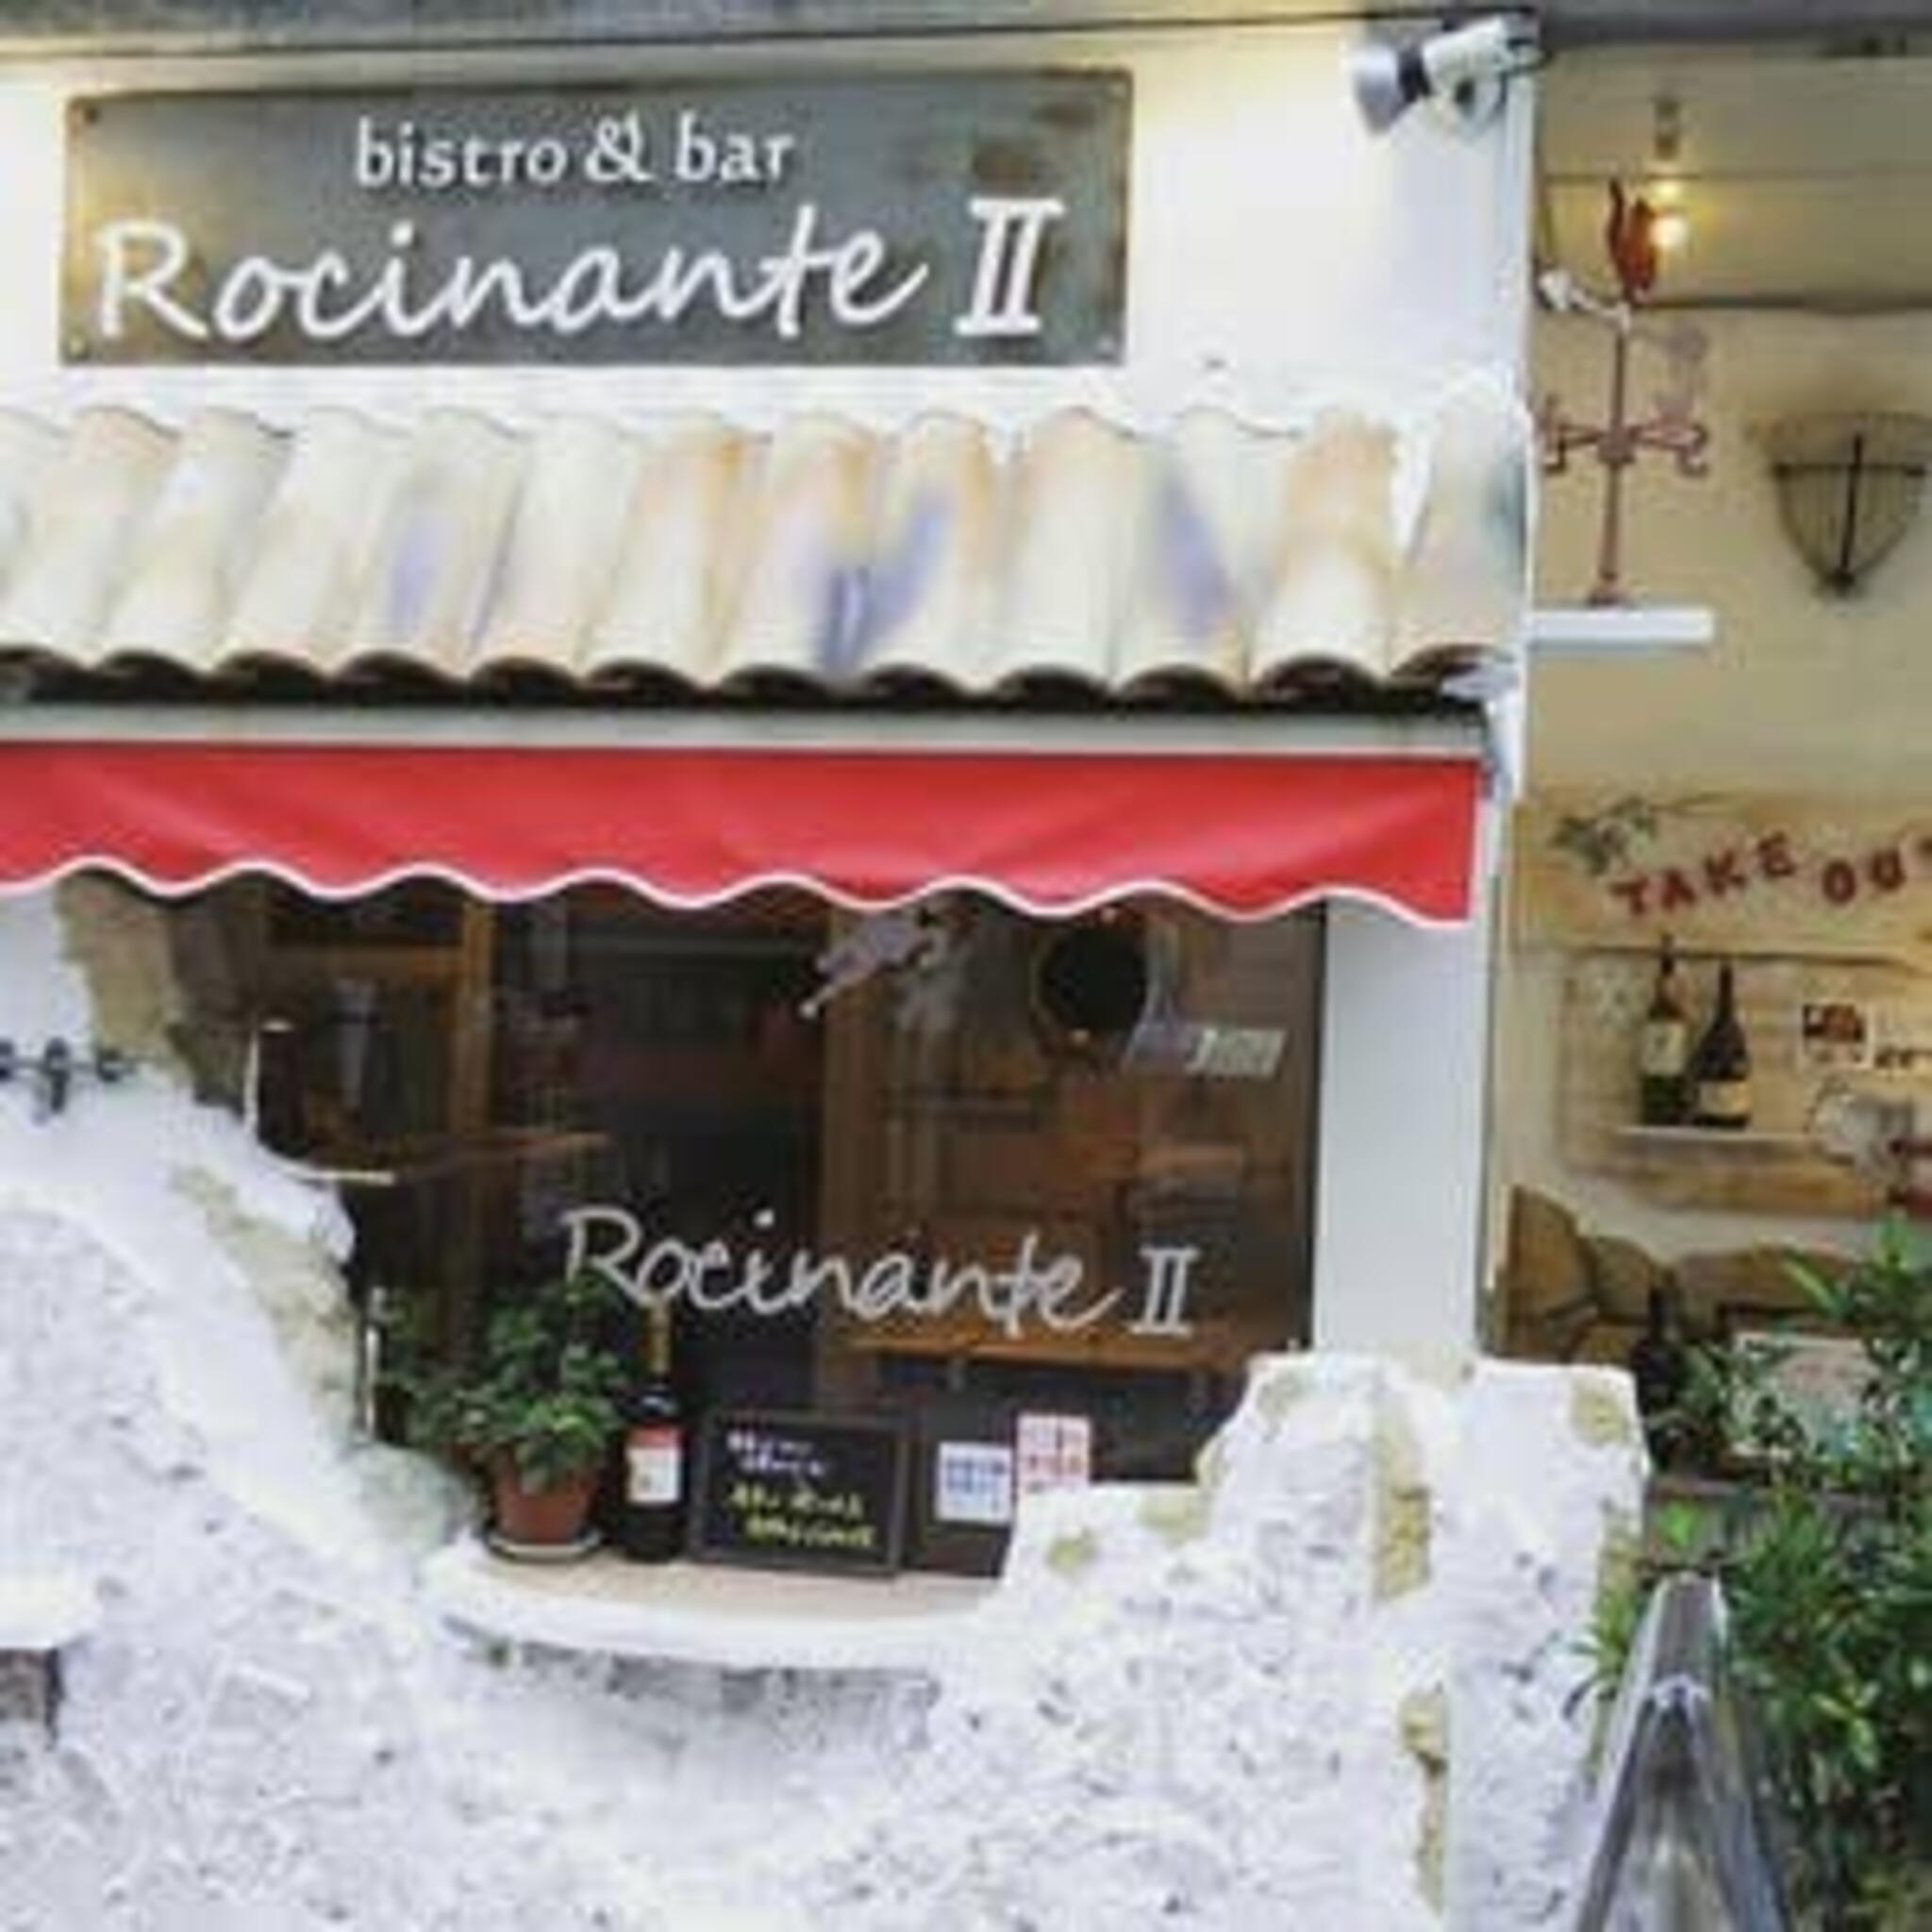 bistro & bar Rocinante IIの代表写真4